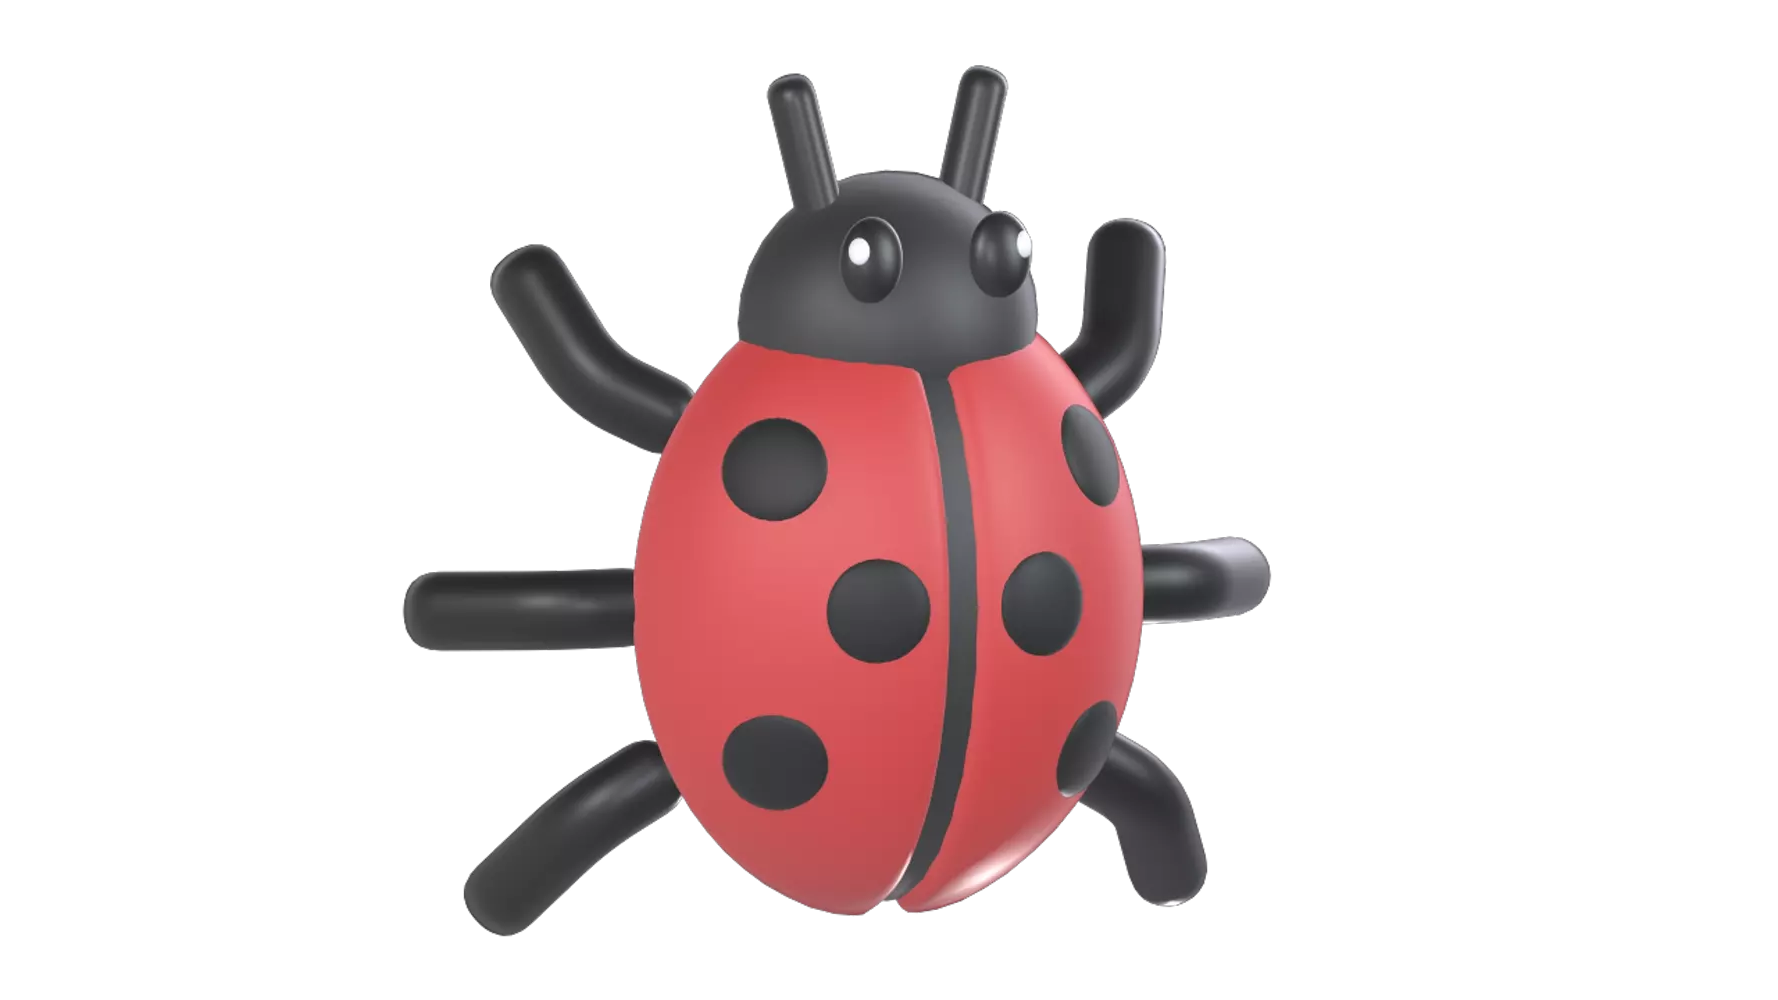 Ladybug 3D Graphic